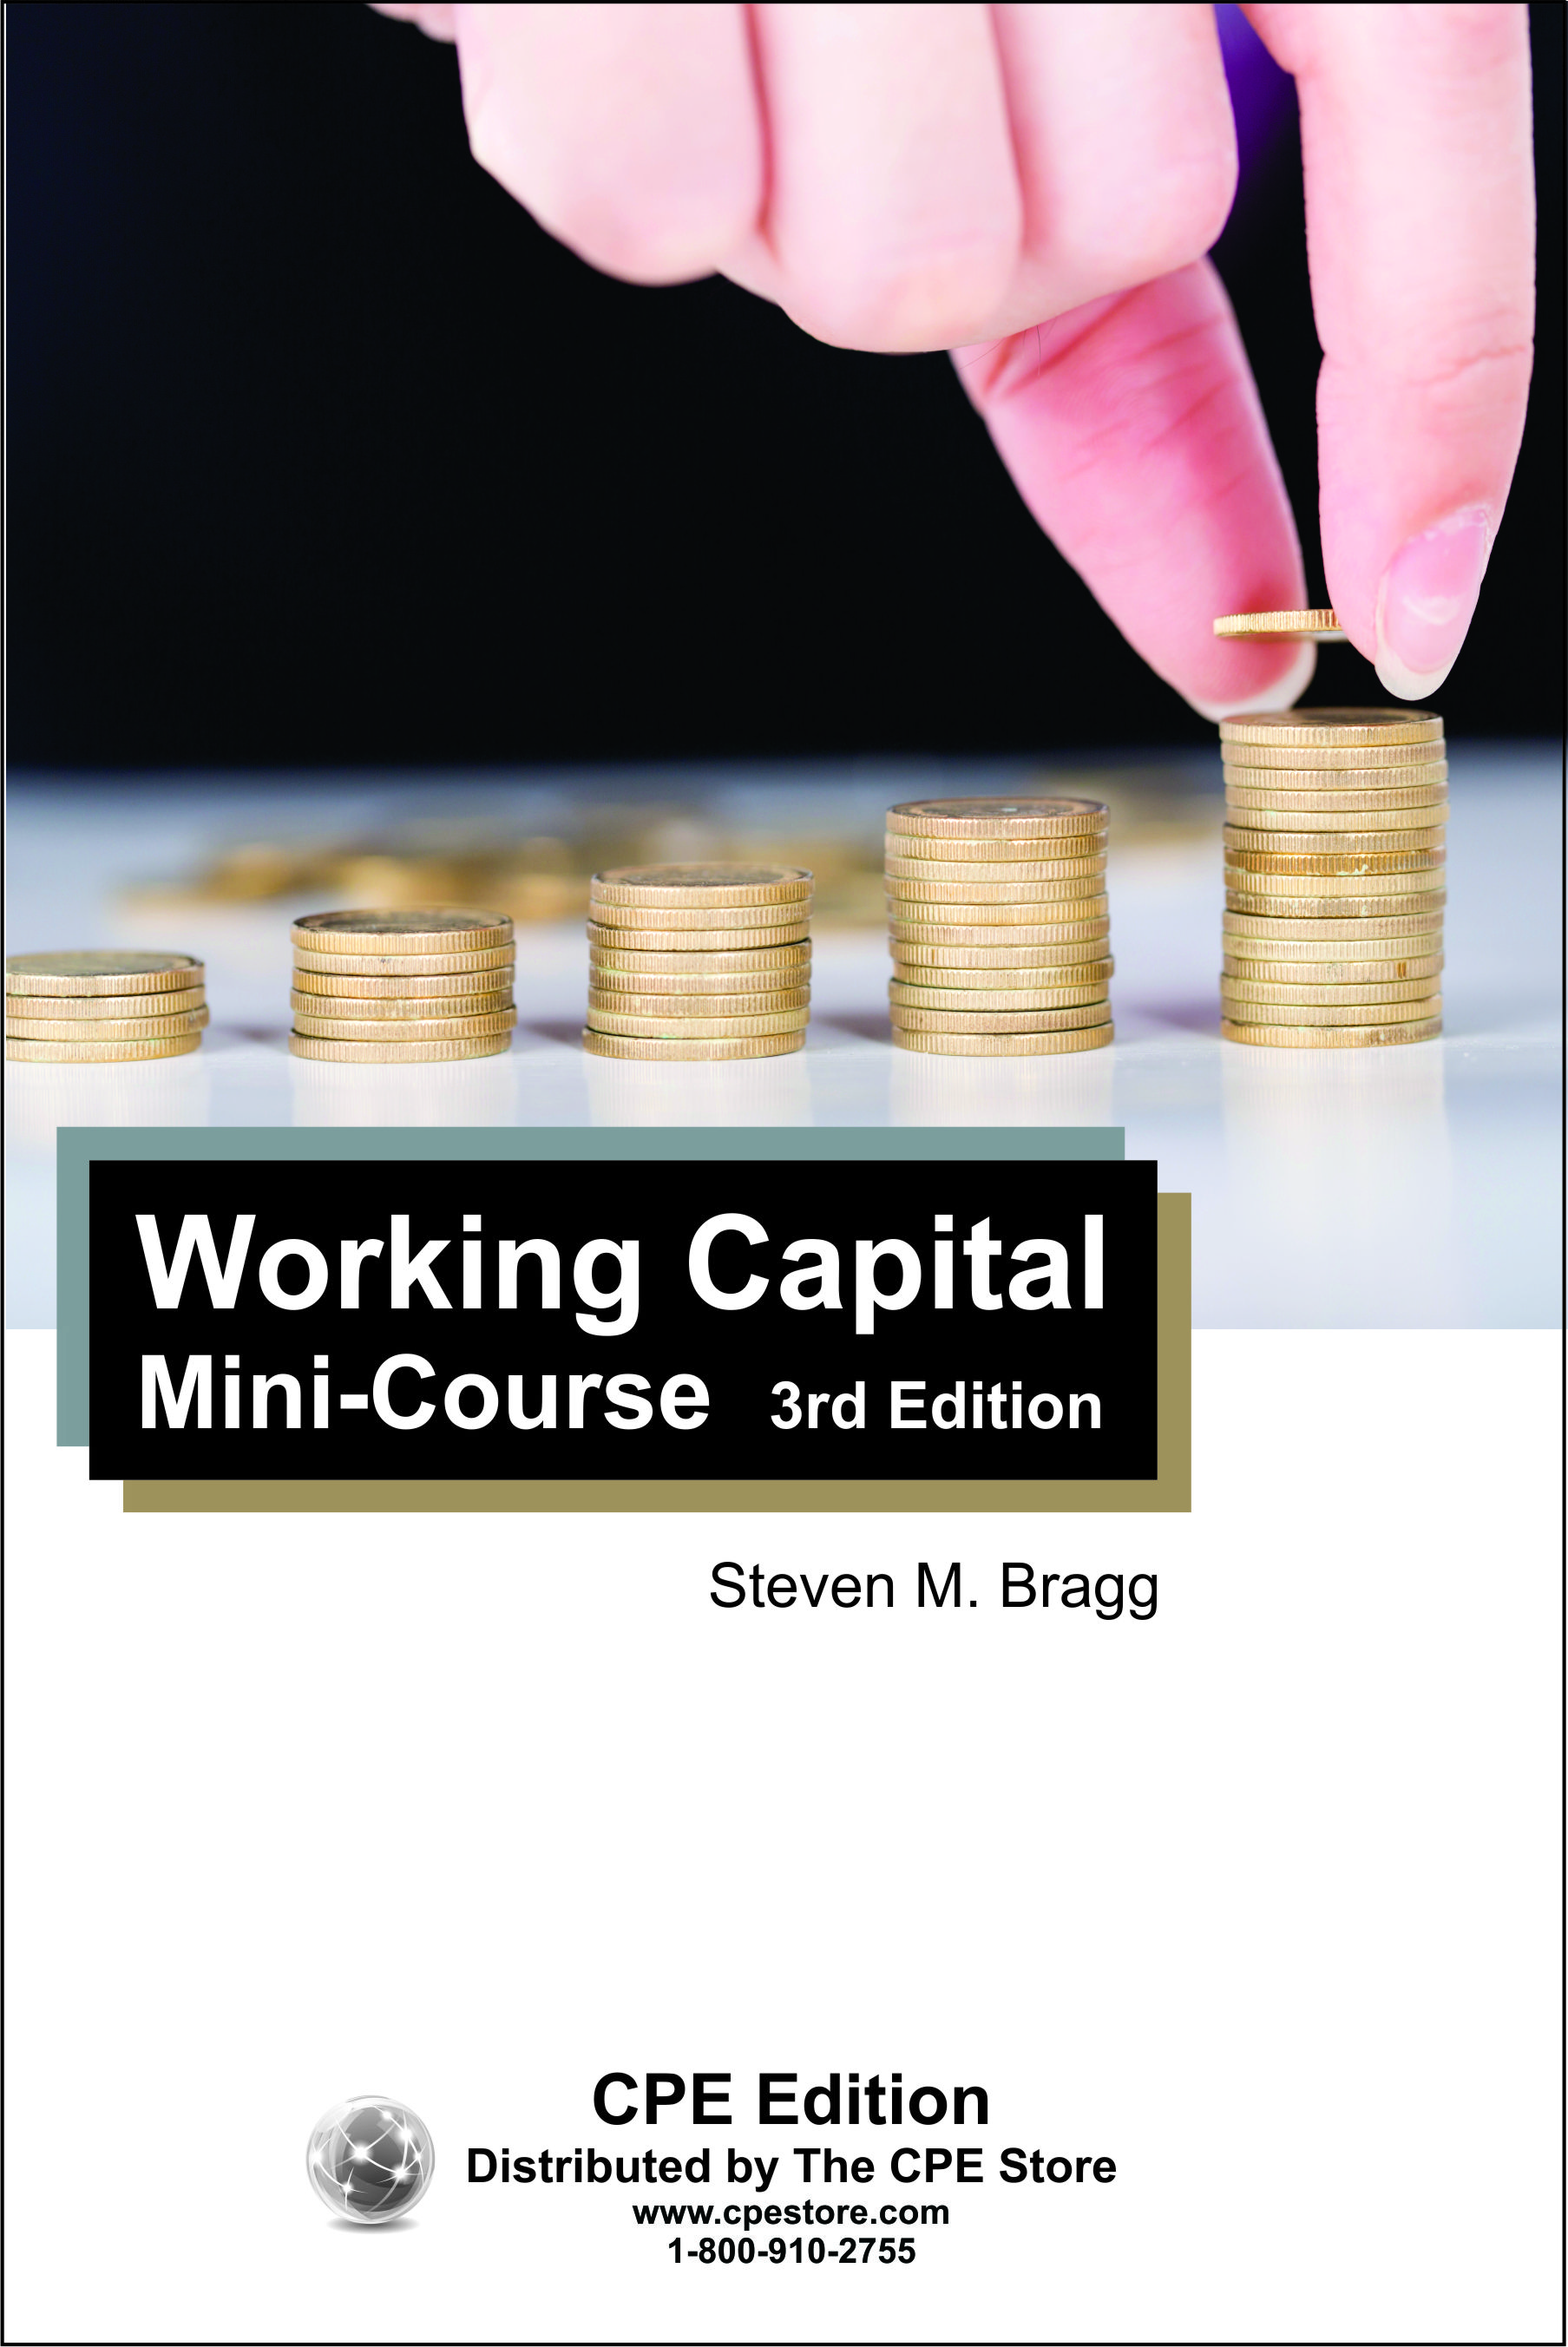 Working Capital Mini-Course